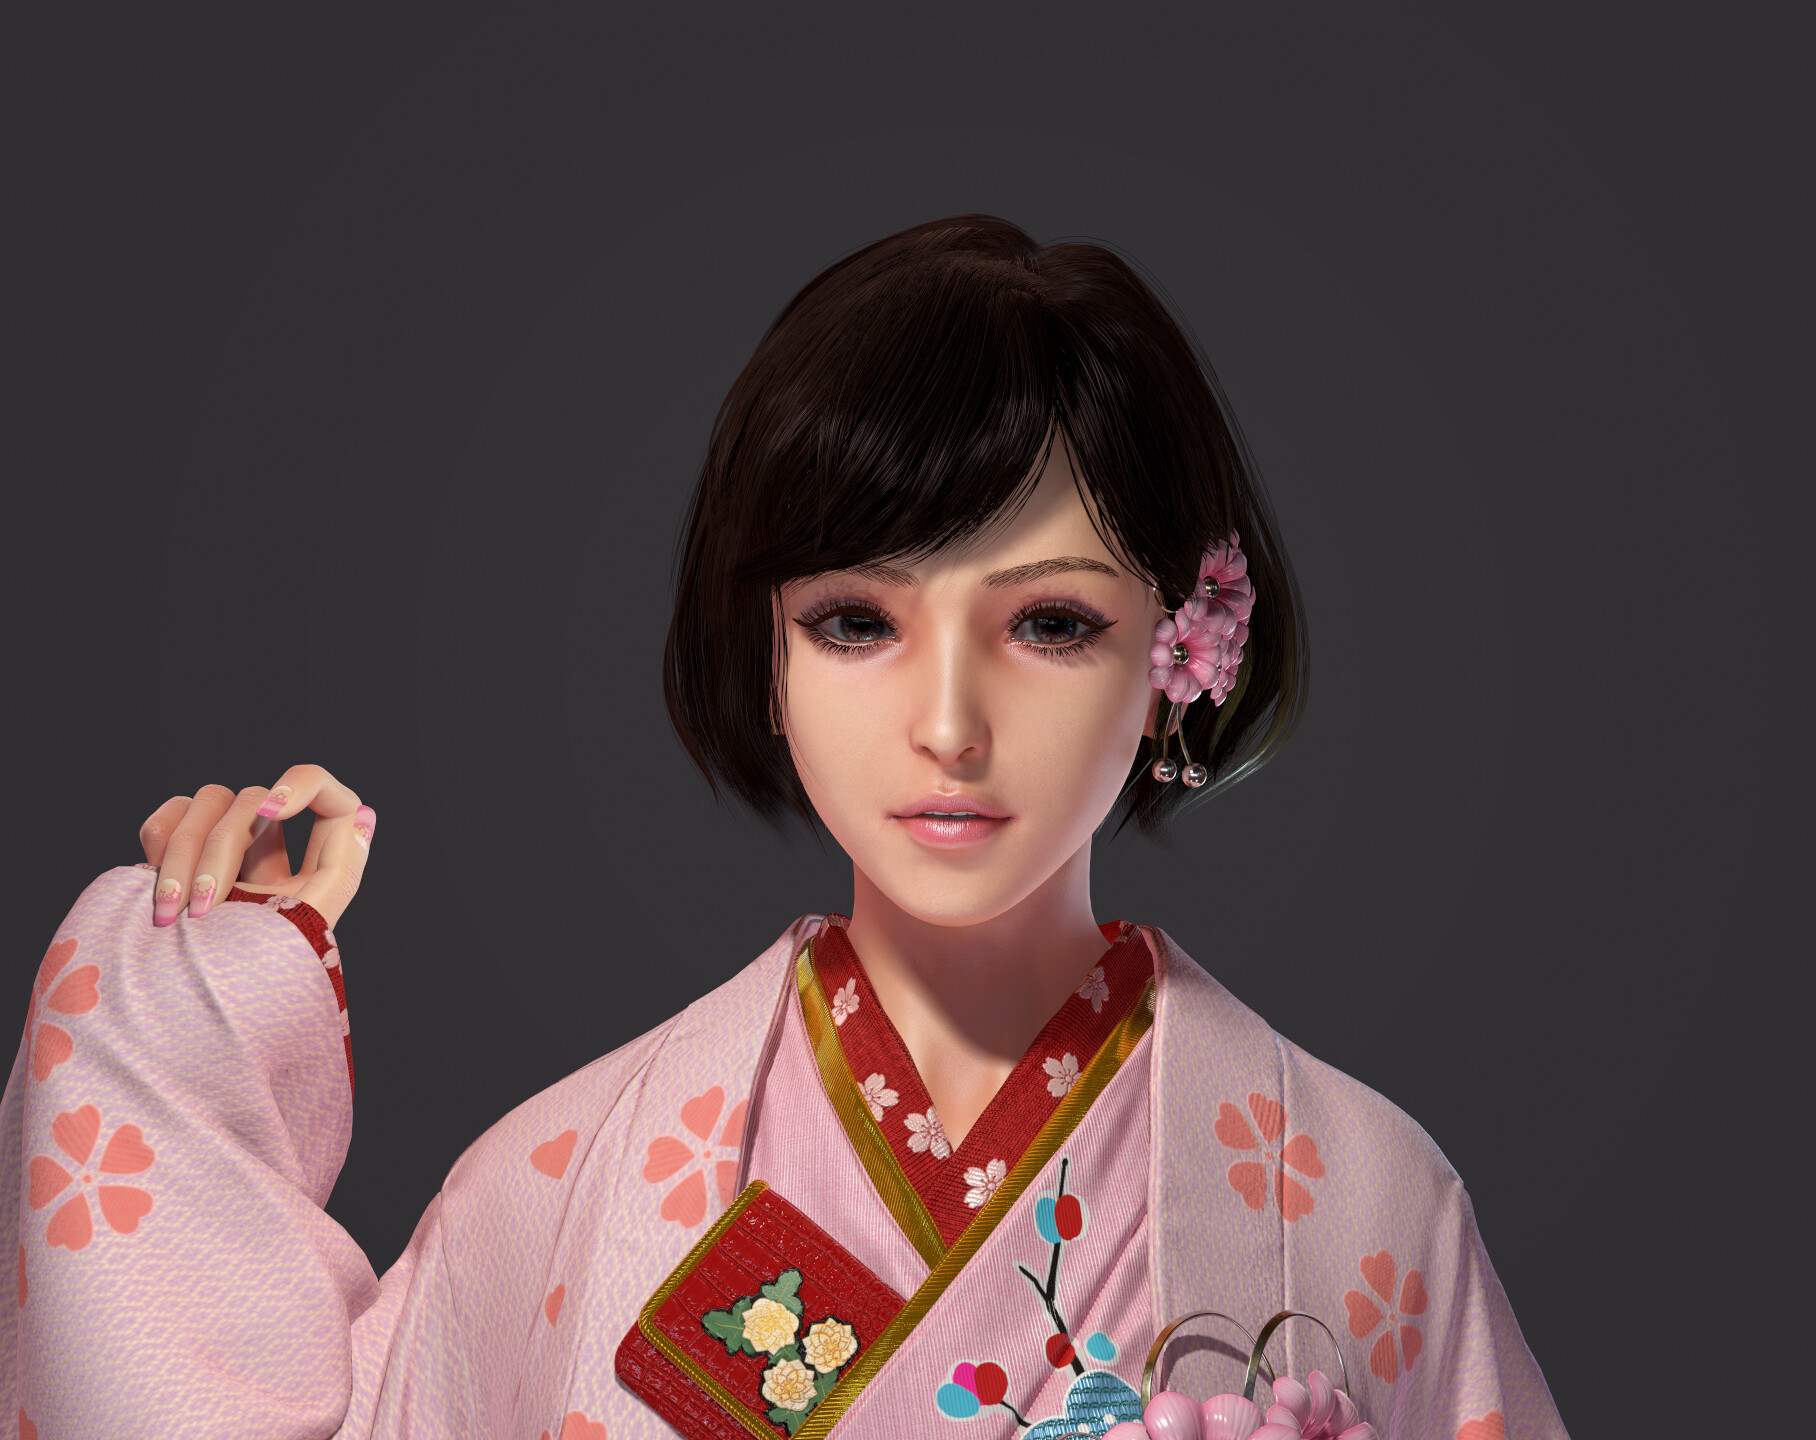 ArtStation - Kimono girl